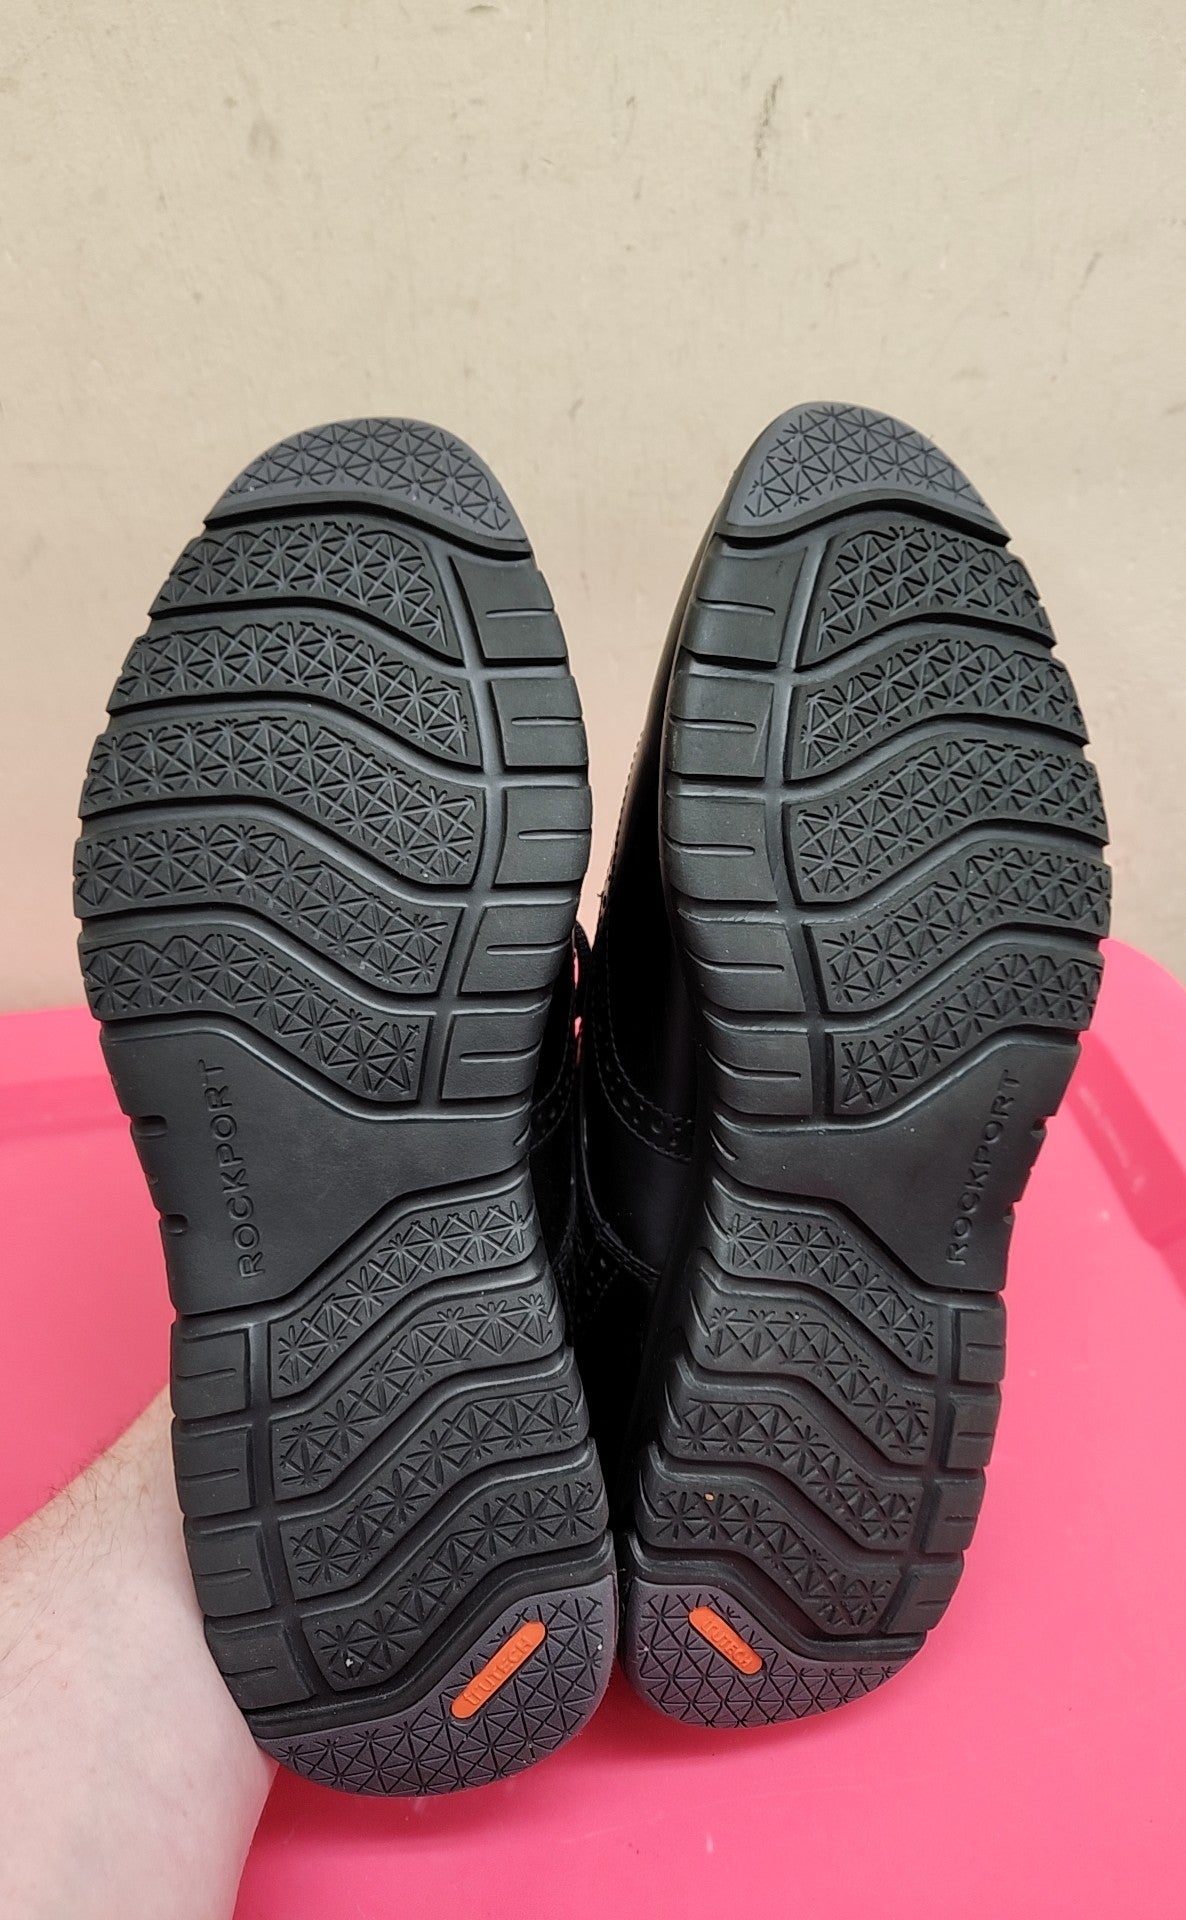 Rockport Men's Size 9-1/2 Black Shoes